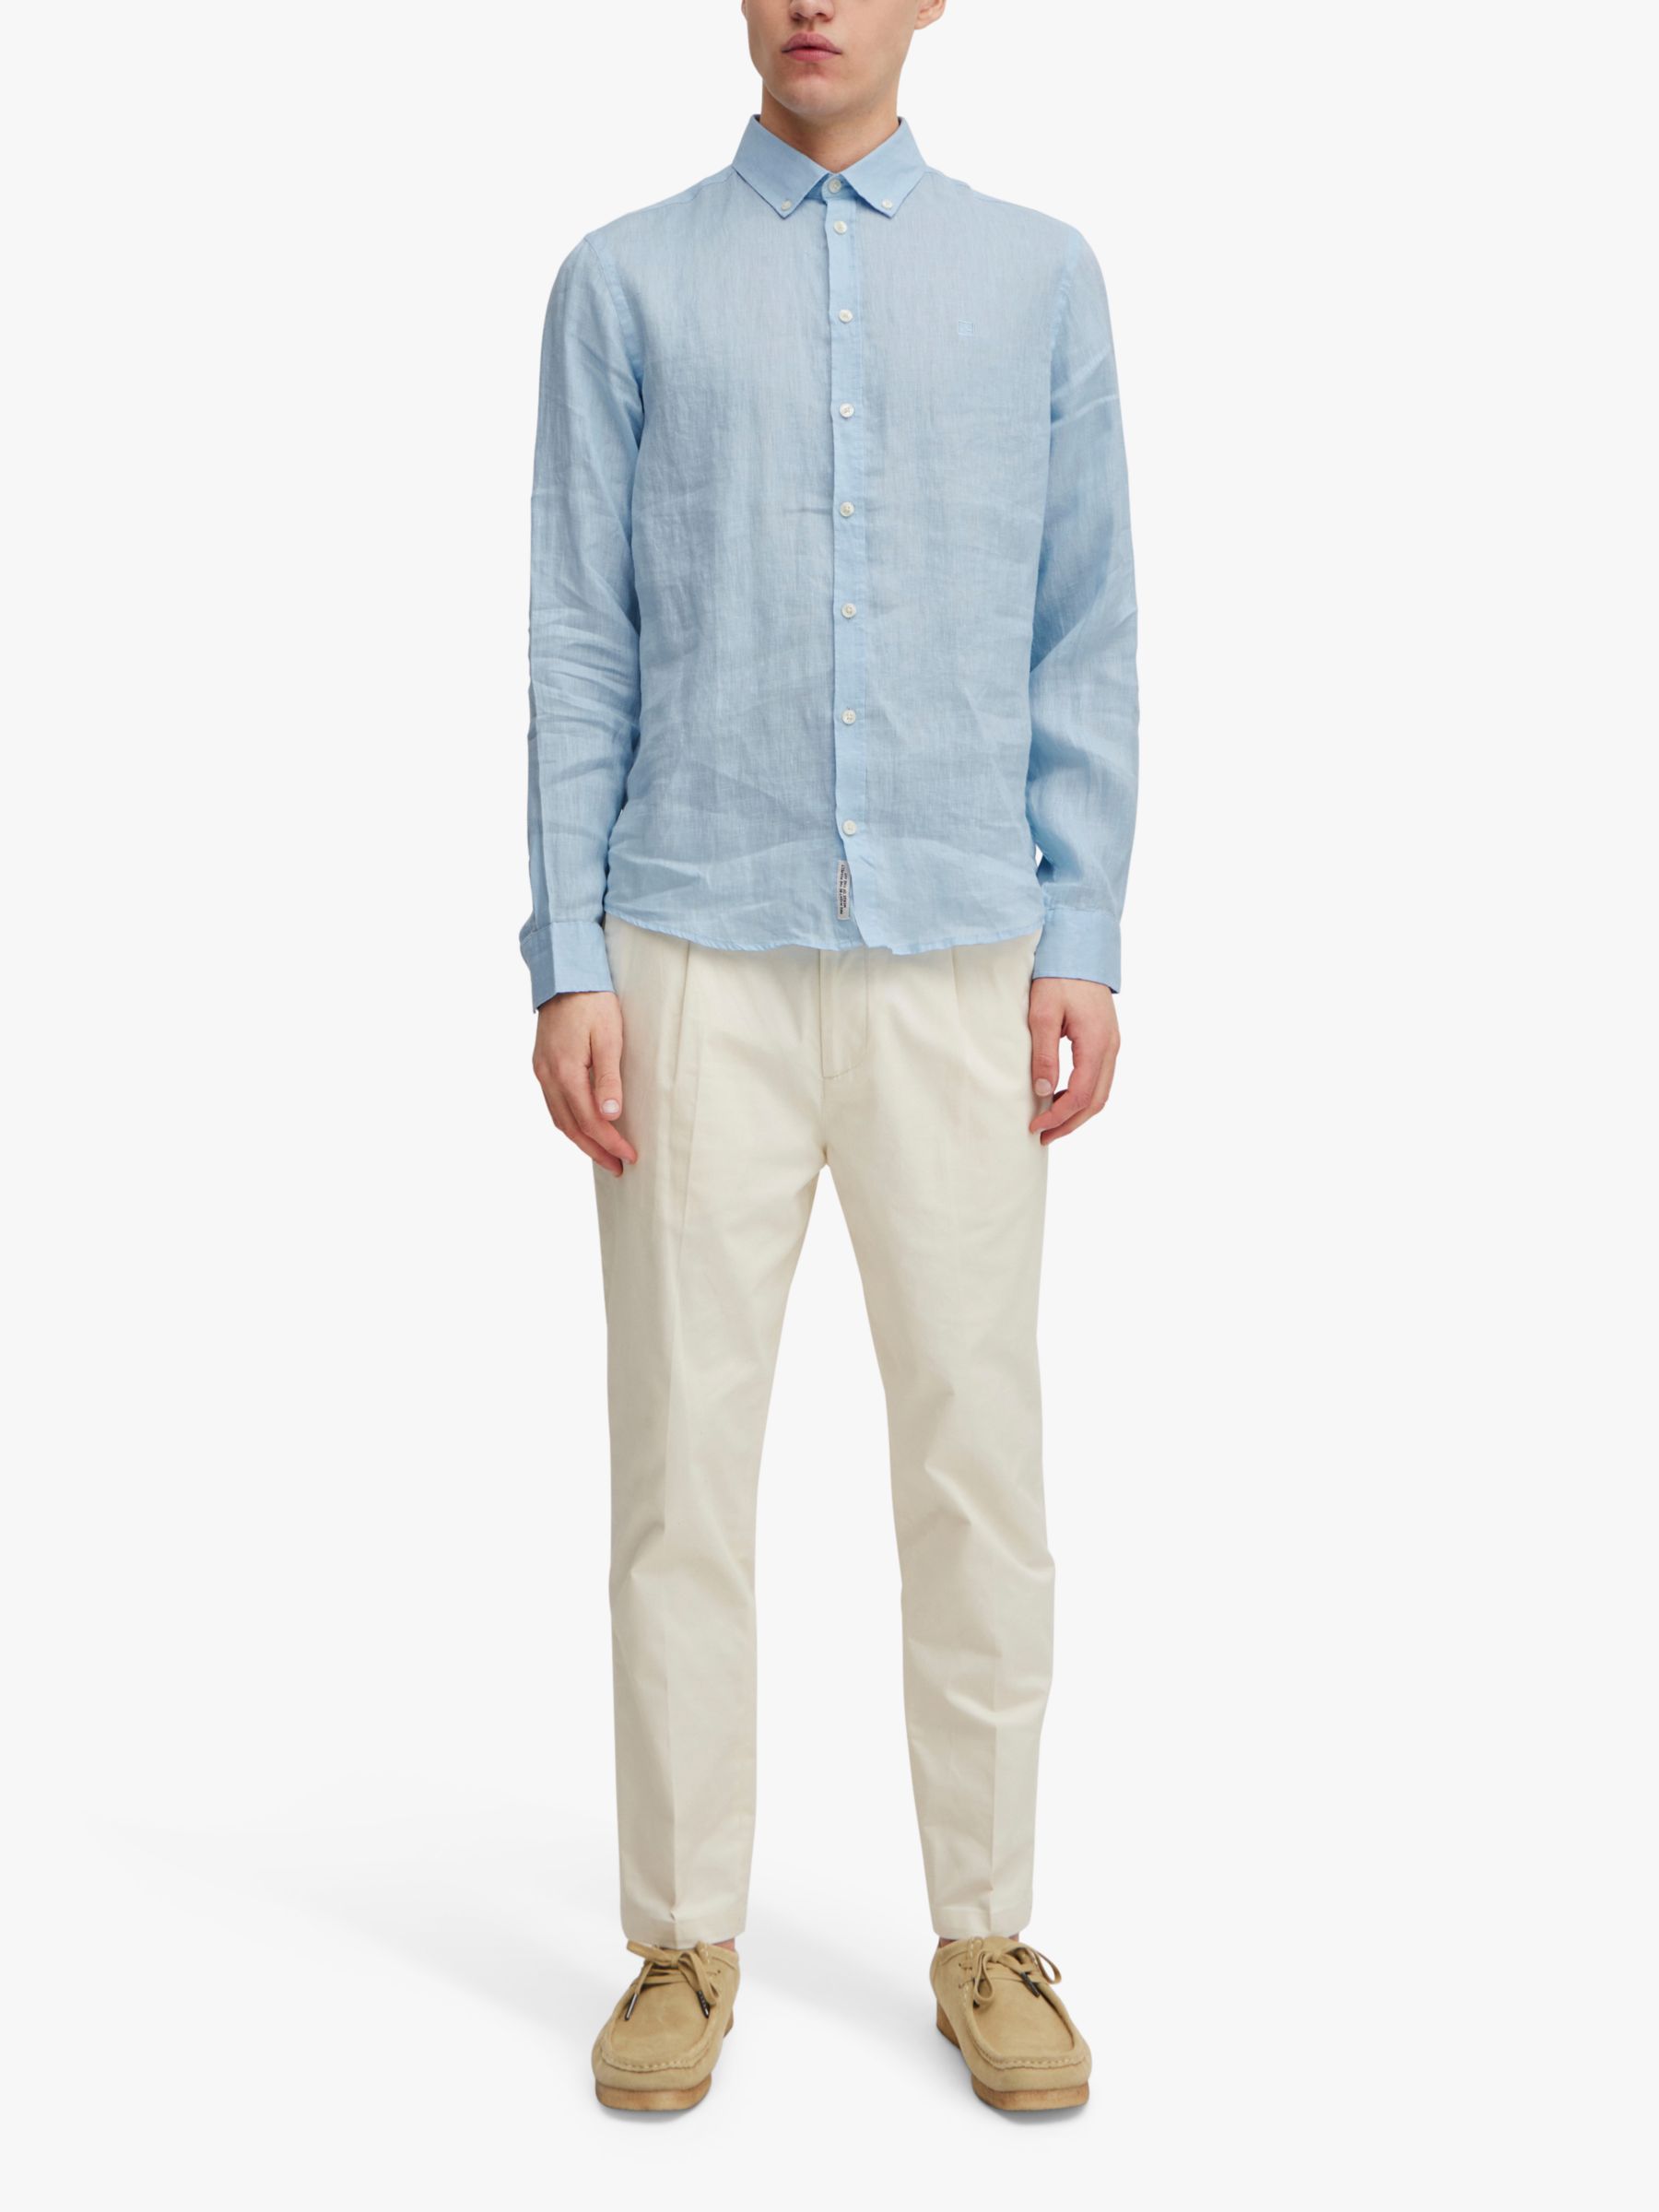 Casual Friday Anton Long Sleeve Linen Shirt , Chambray Blue, S